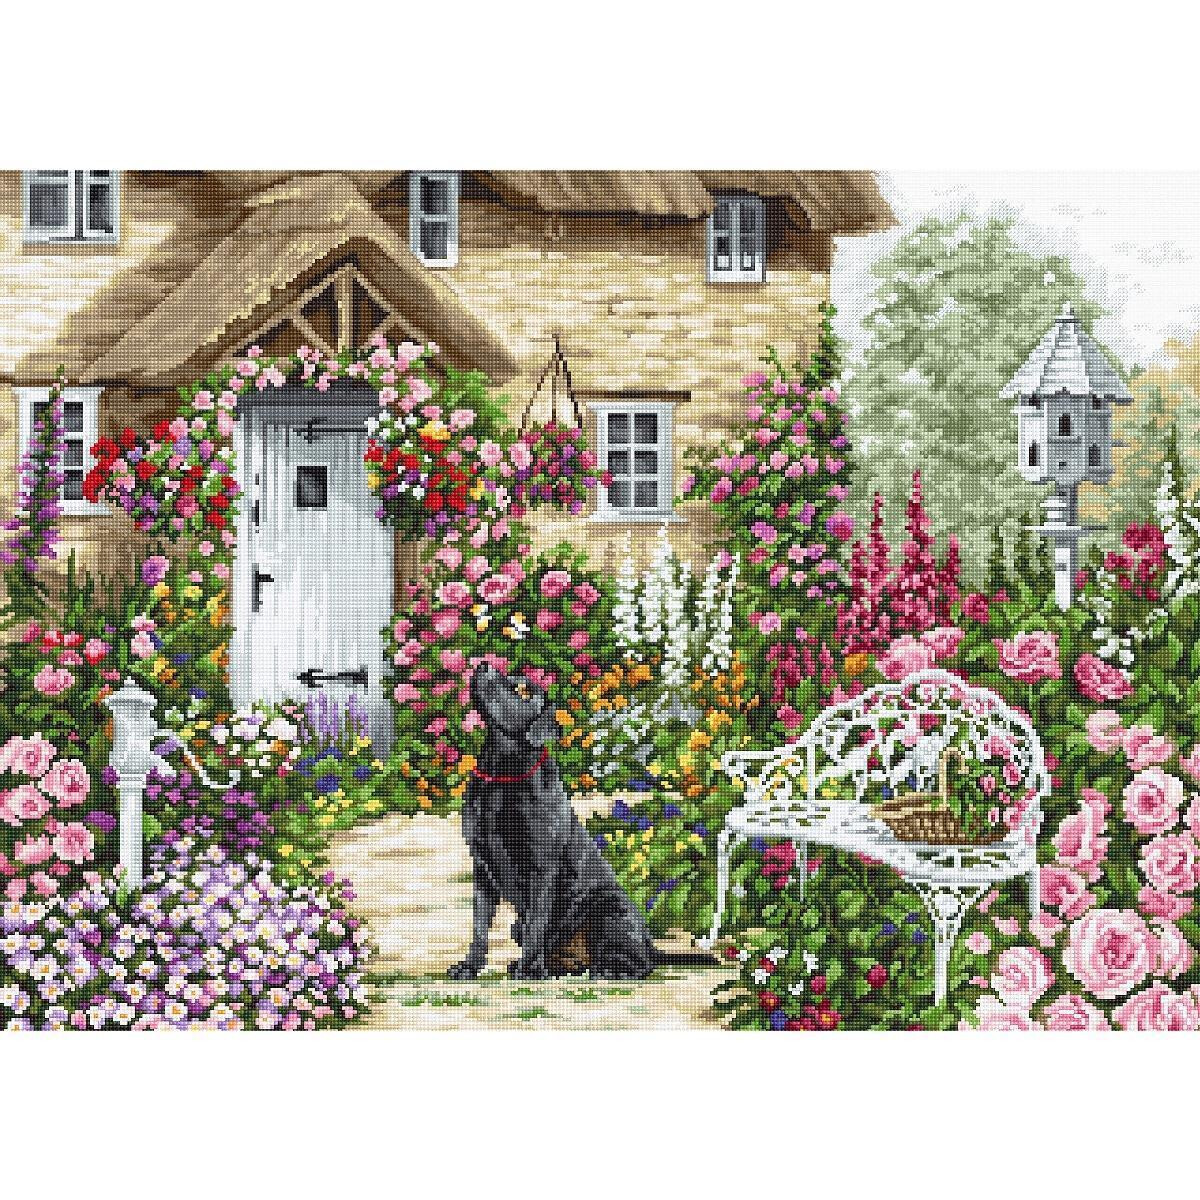 A lush garden scene shows a quaint cottage with a...